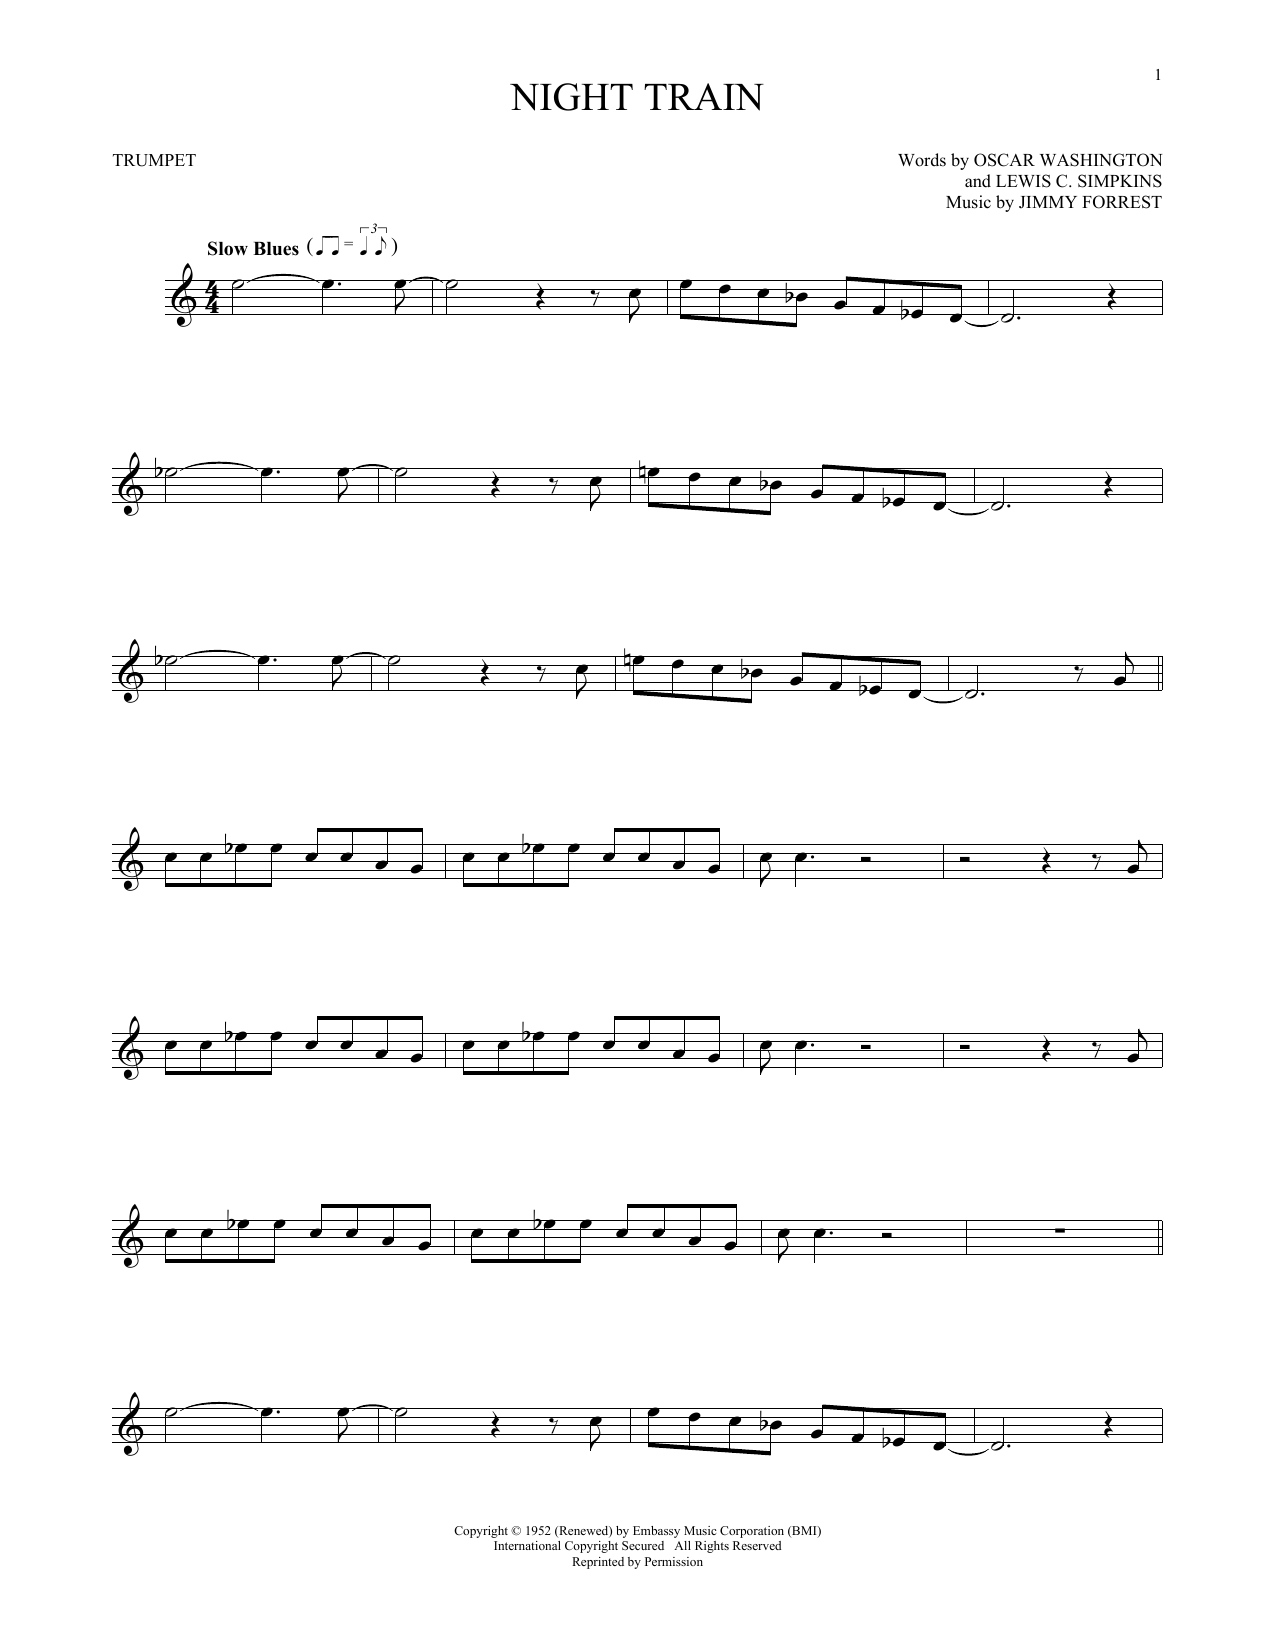 Oscar Washington Night Train Sheet Music Notes & Chords for Violin - Download or Print PDF